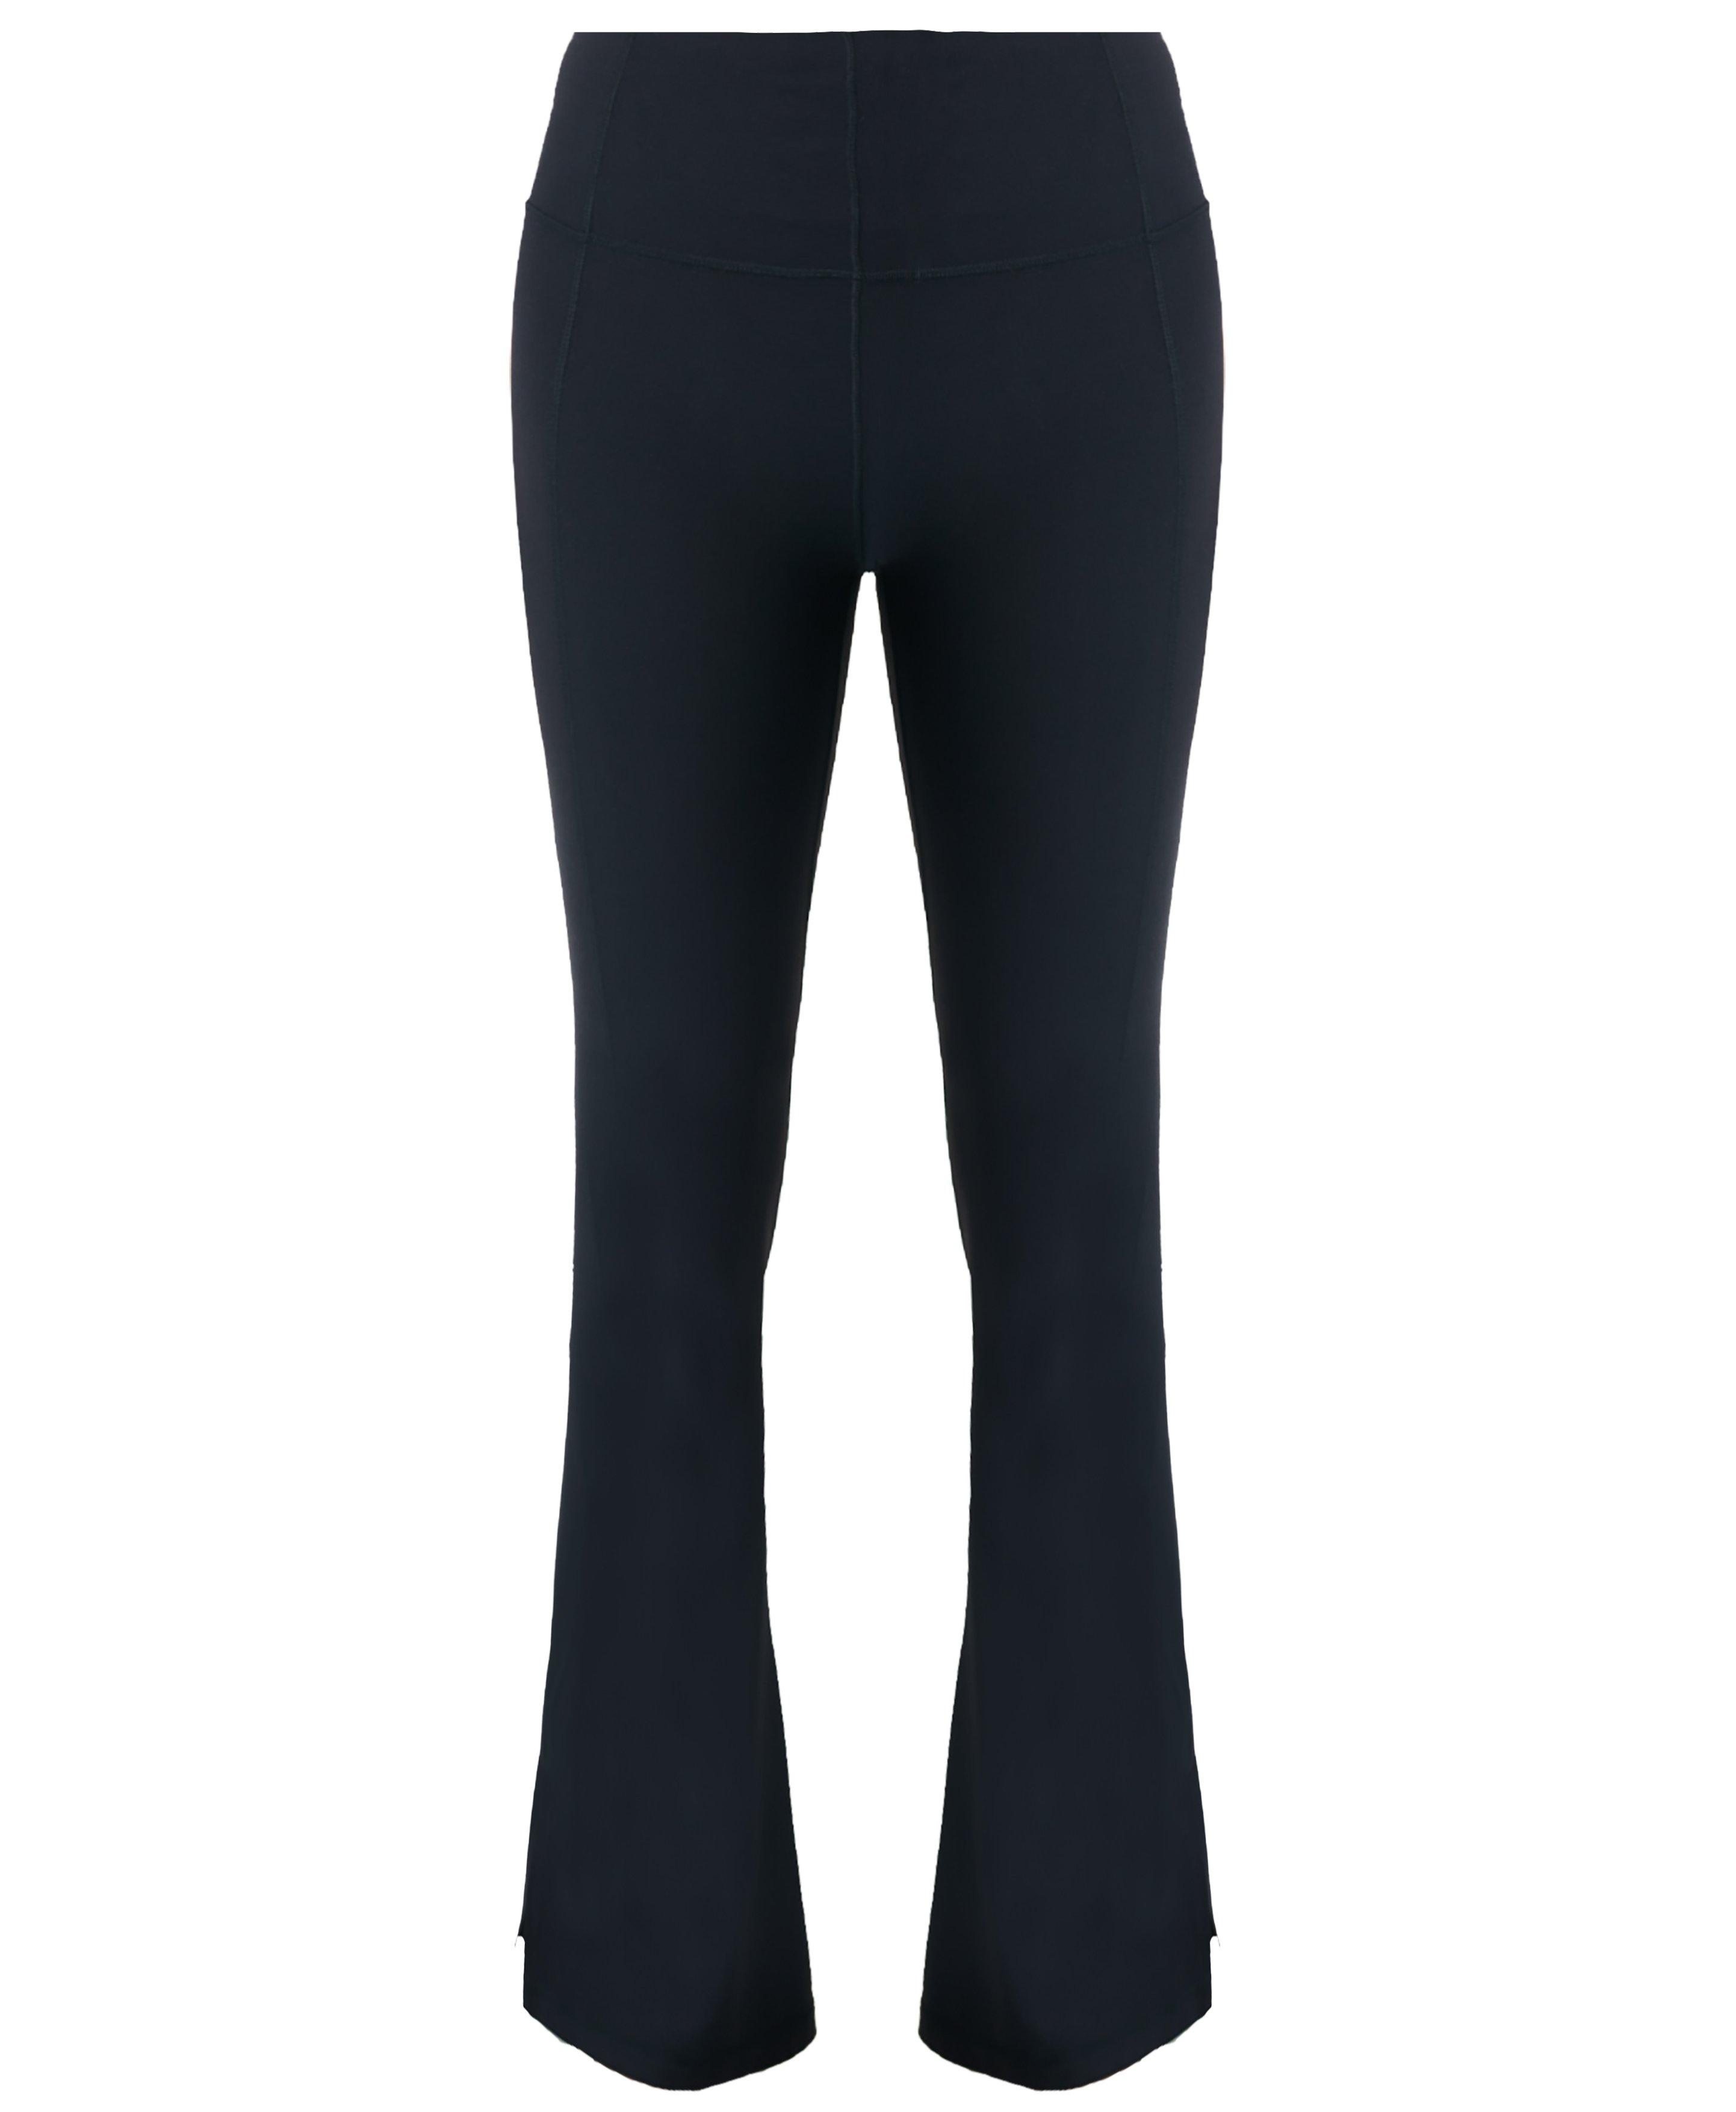 Super Soft Flare Yoga Trousers- urbangrey, Women's Trousers & Yoga Pants